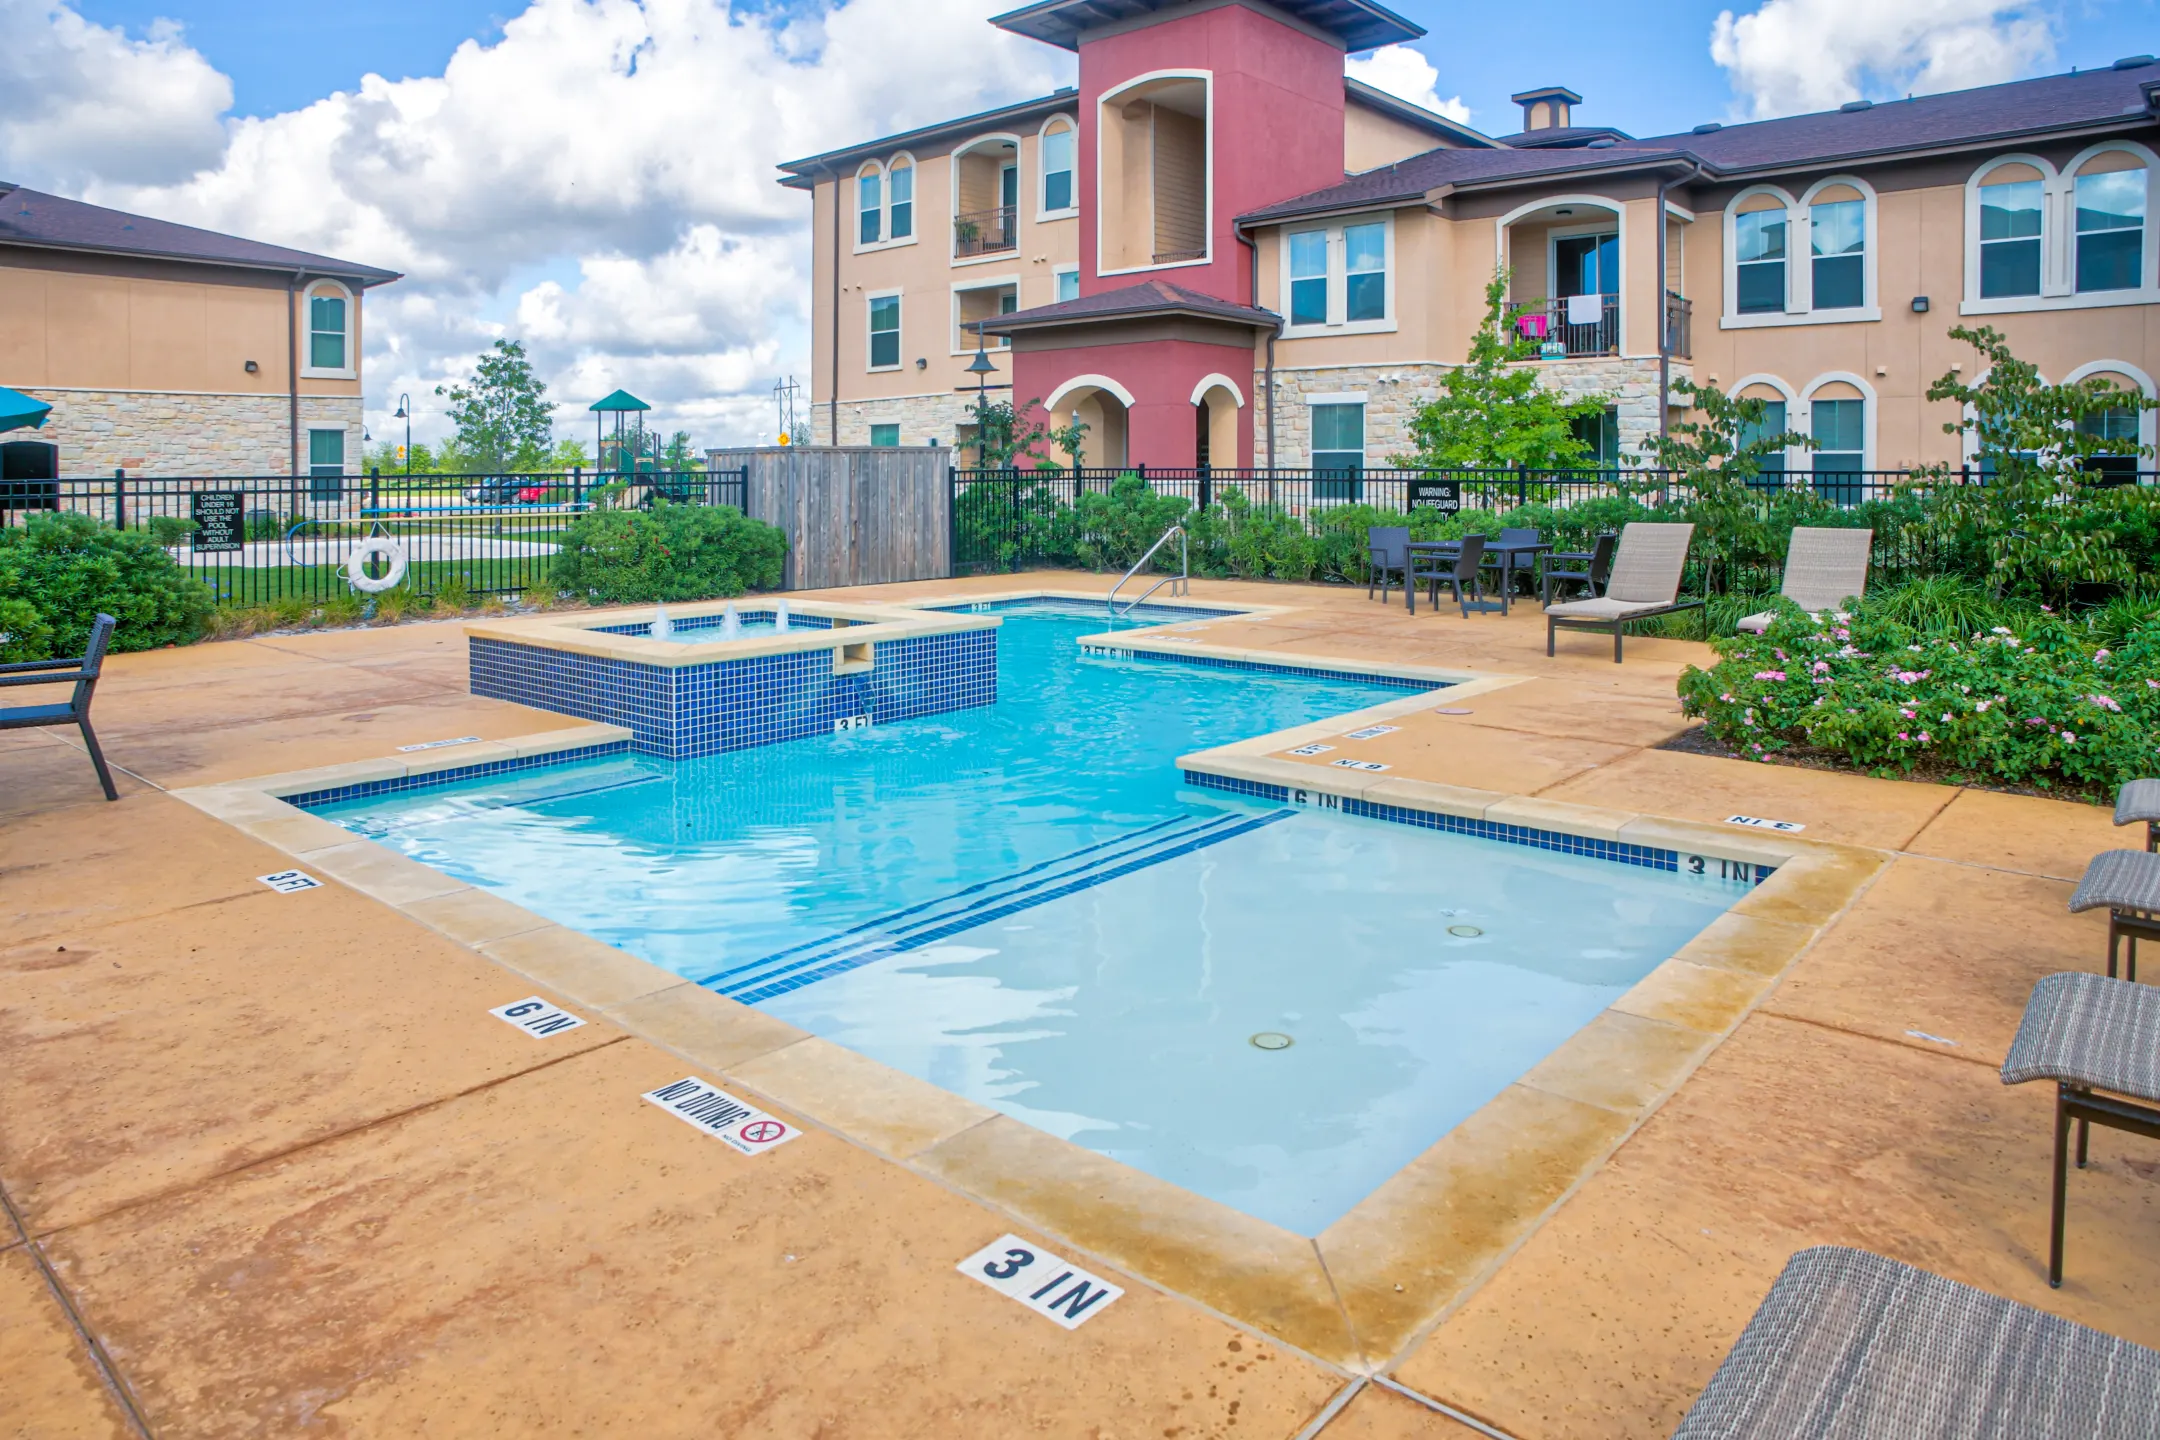 Pool - Highland Villas Apartments - Bryan, TX